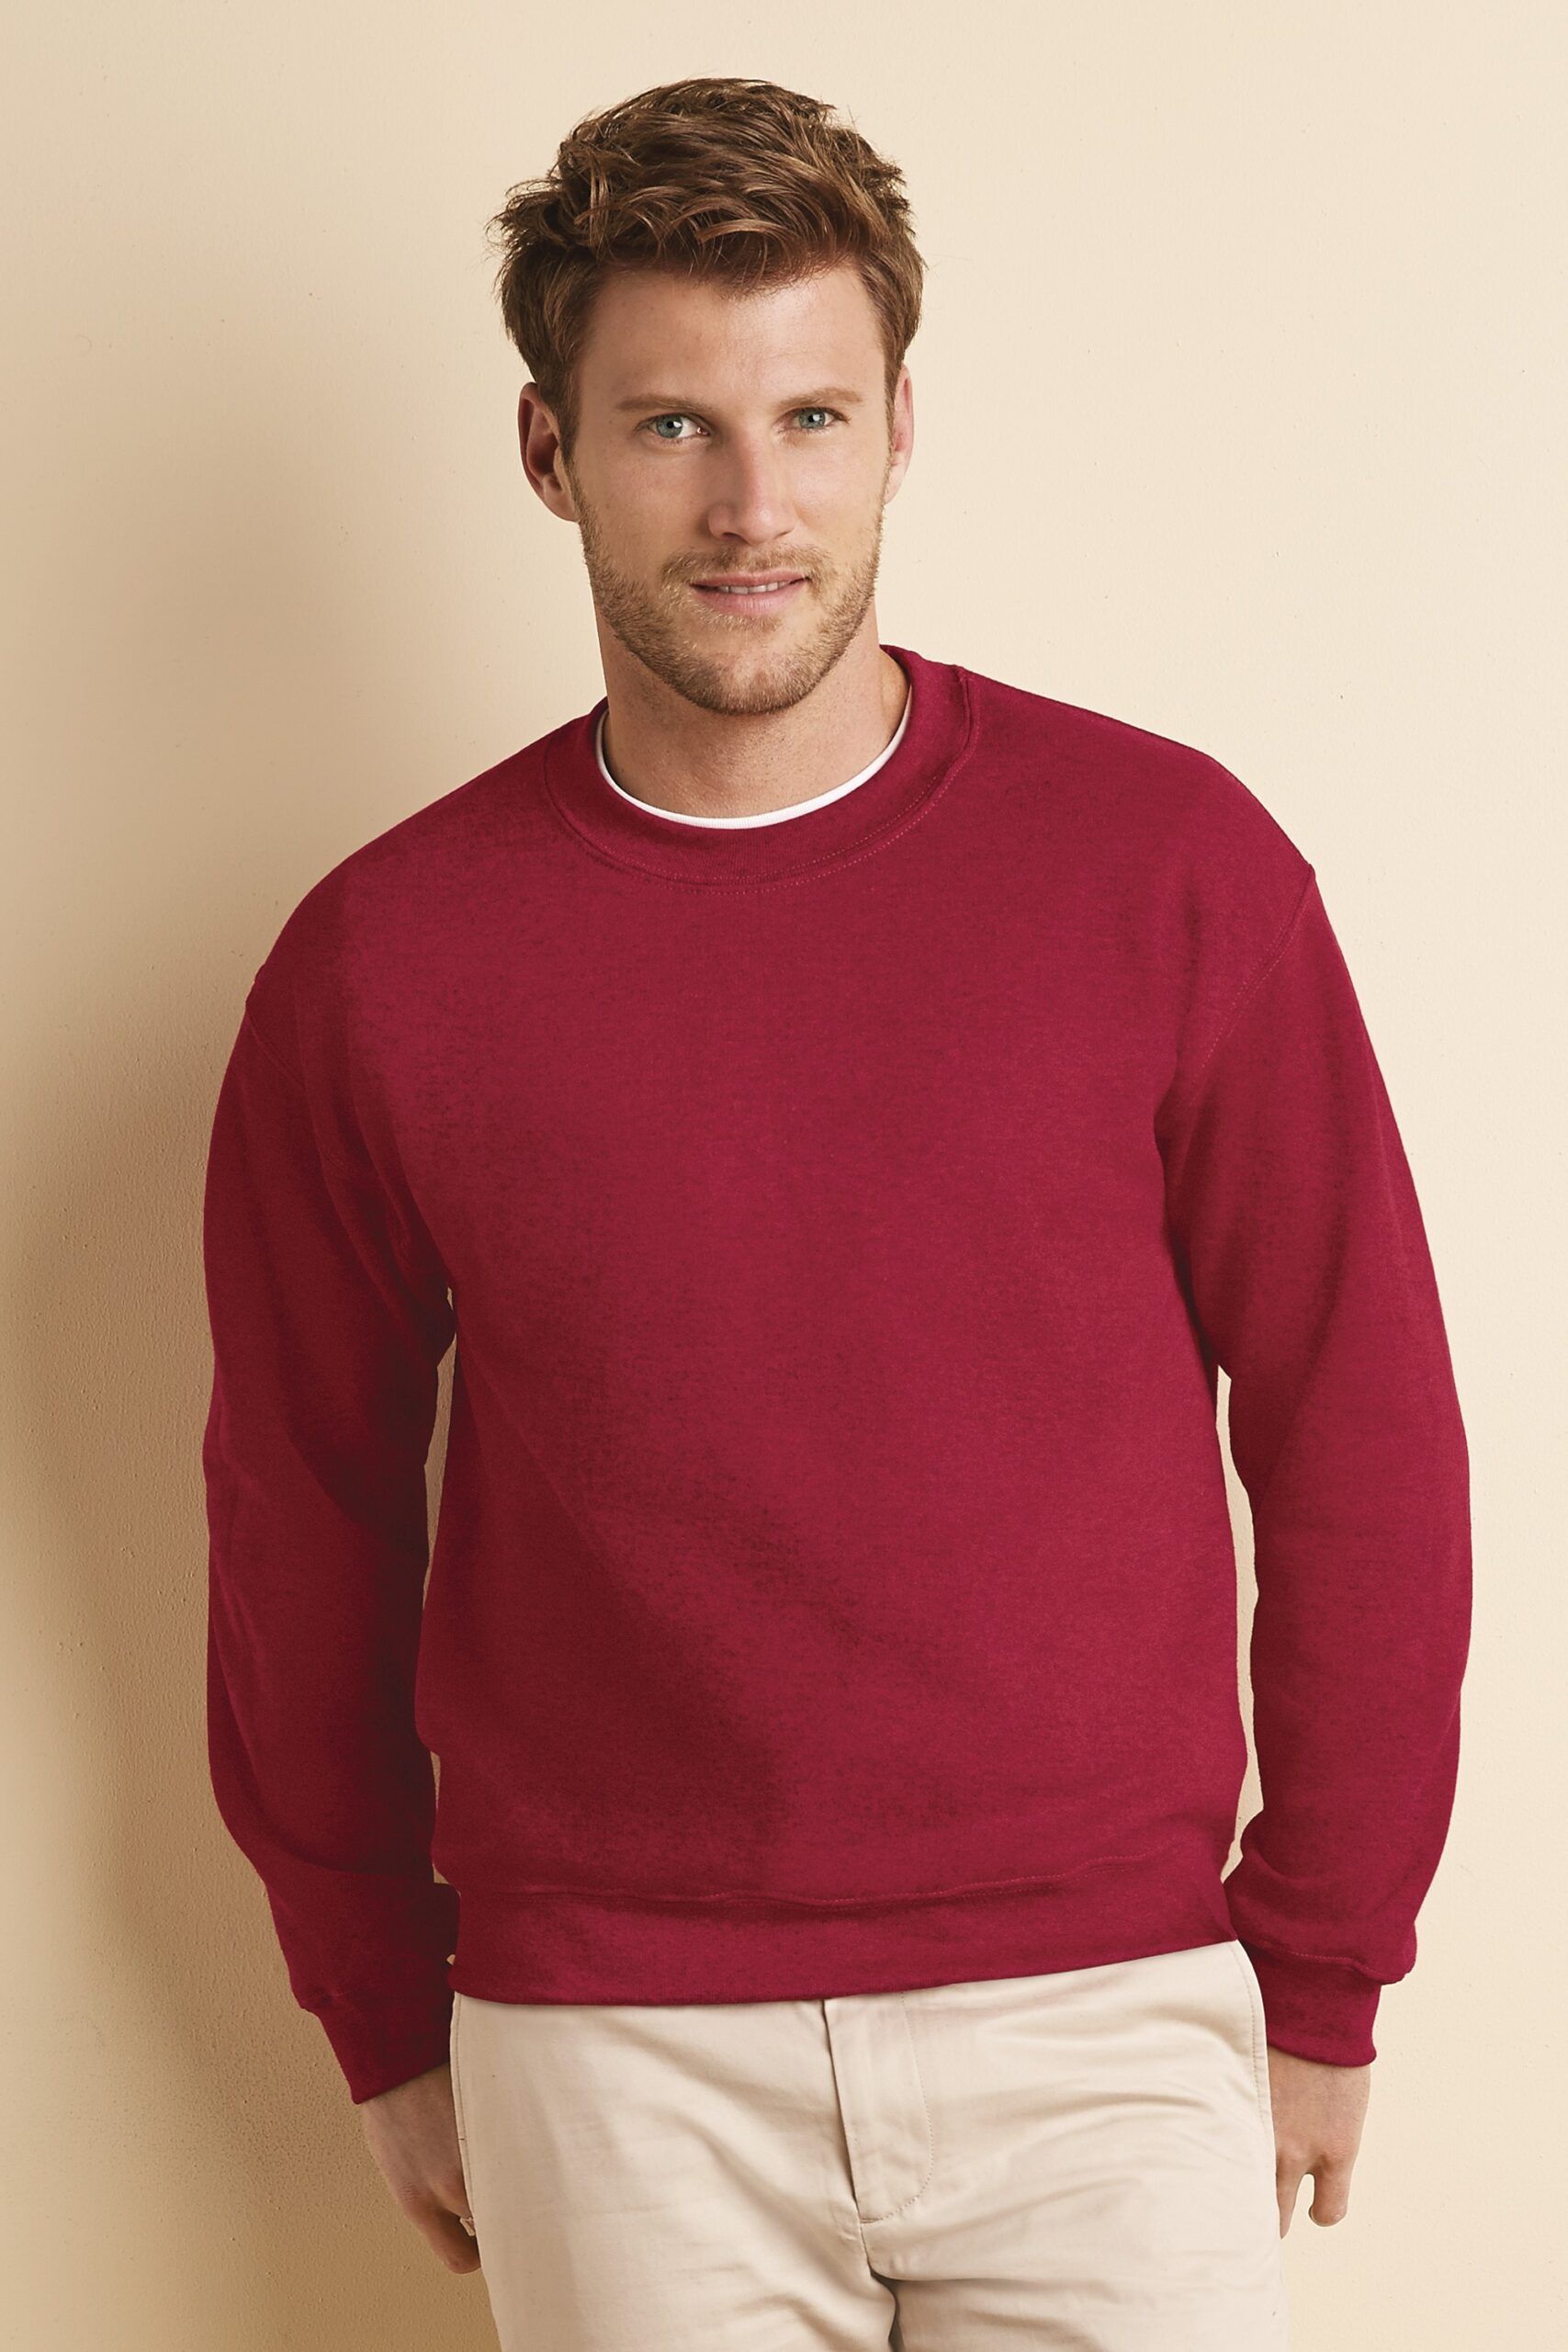 Gildan brand 1801 crew neck sweater on male model